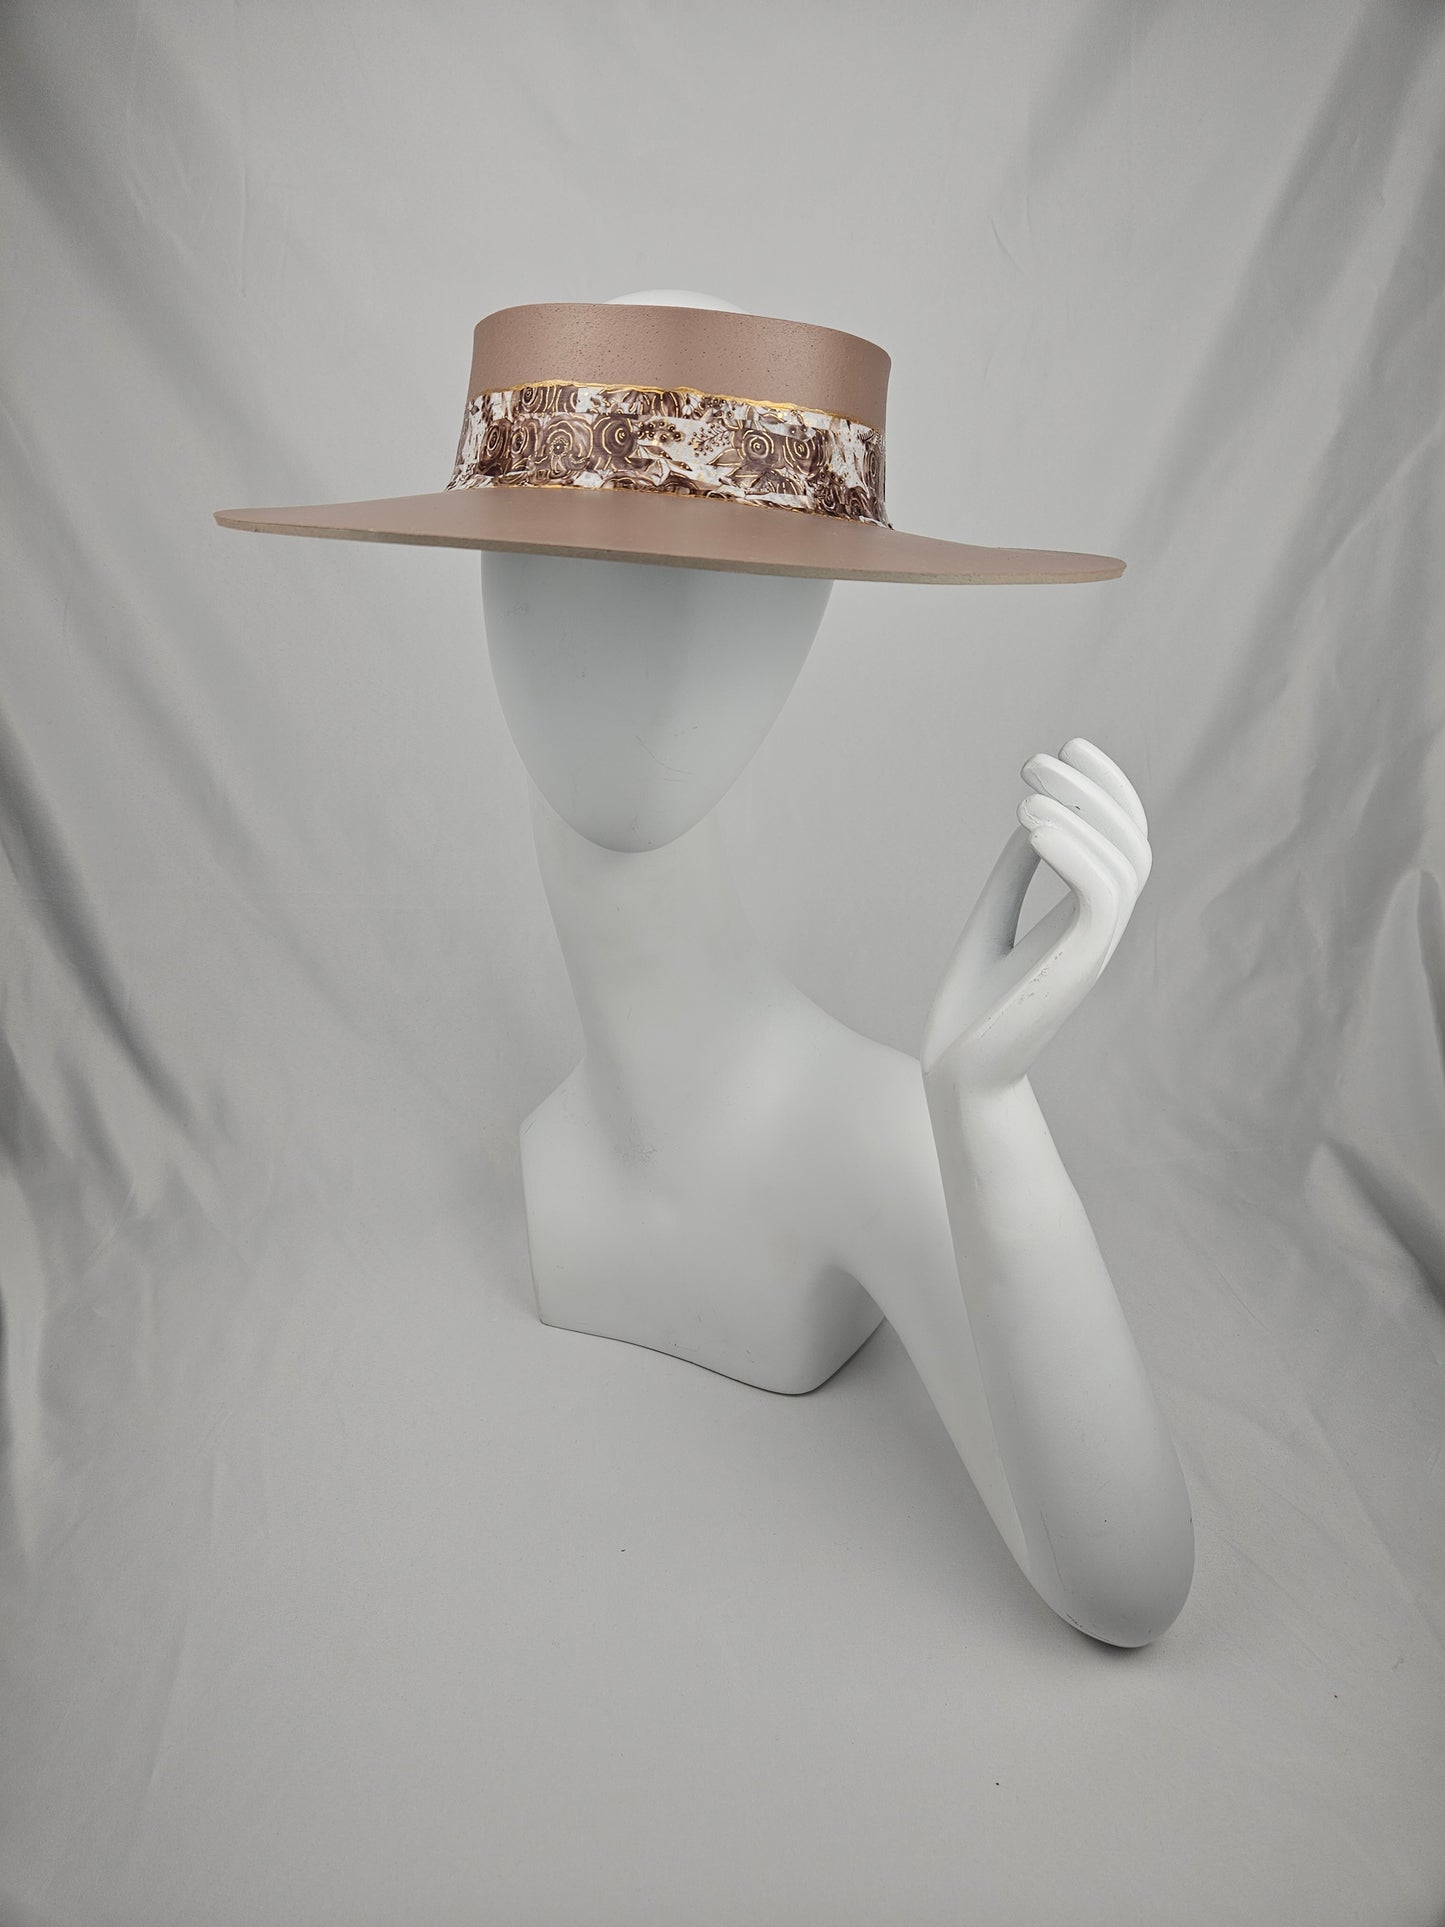 Rich Brown Audrey Foam Sun Visor Hat with Golden Floral Band: Wedding, Walks, Brunch, Swim, Pool, Easter, Church, No Headache, Derby